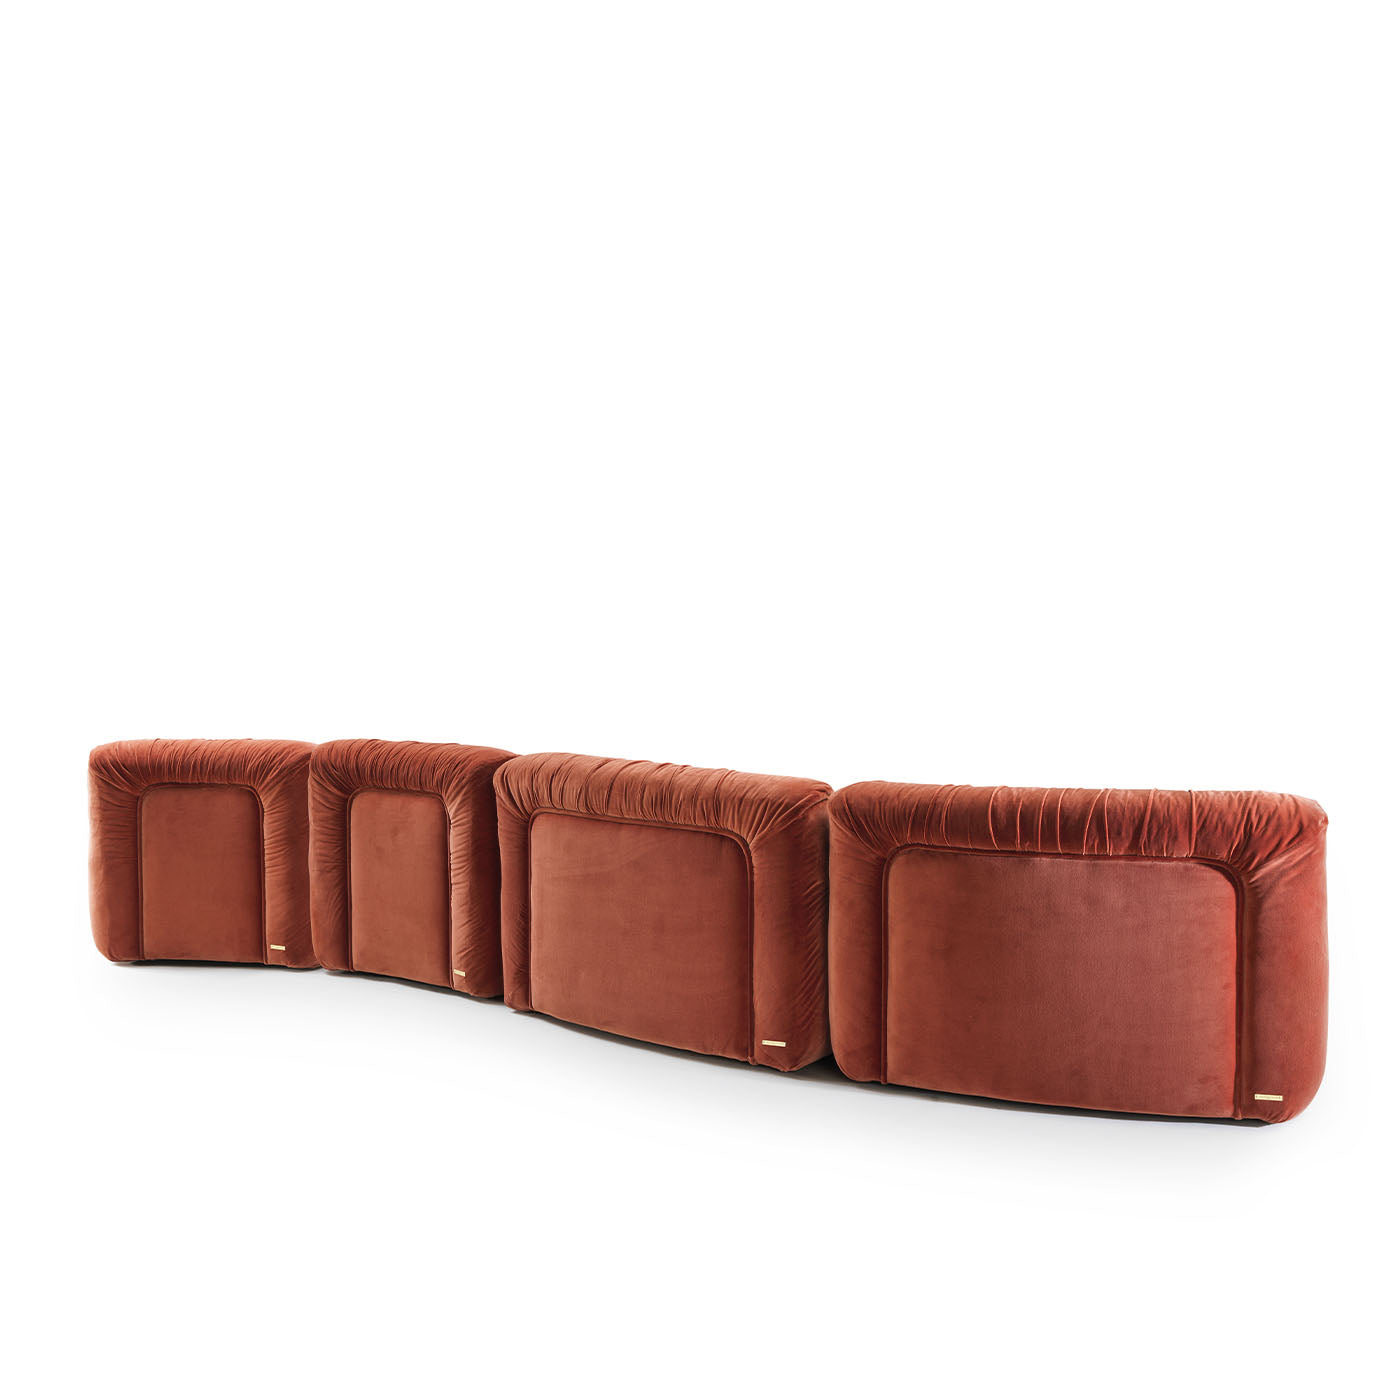 Mambo Modular Orange Fabric Sofa by Lorenza Bozzoli - Alternative view 2